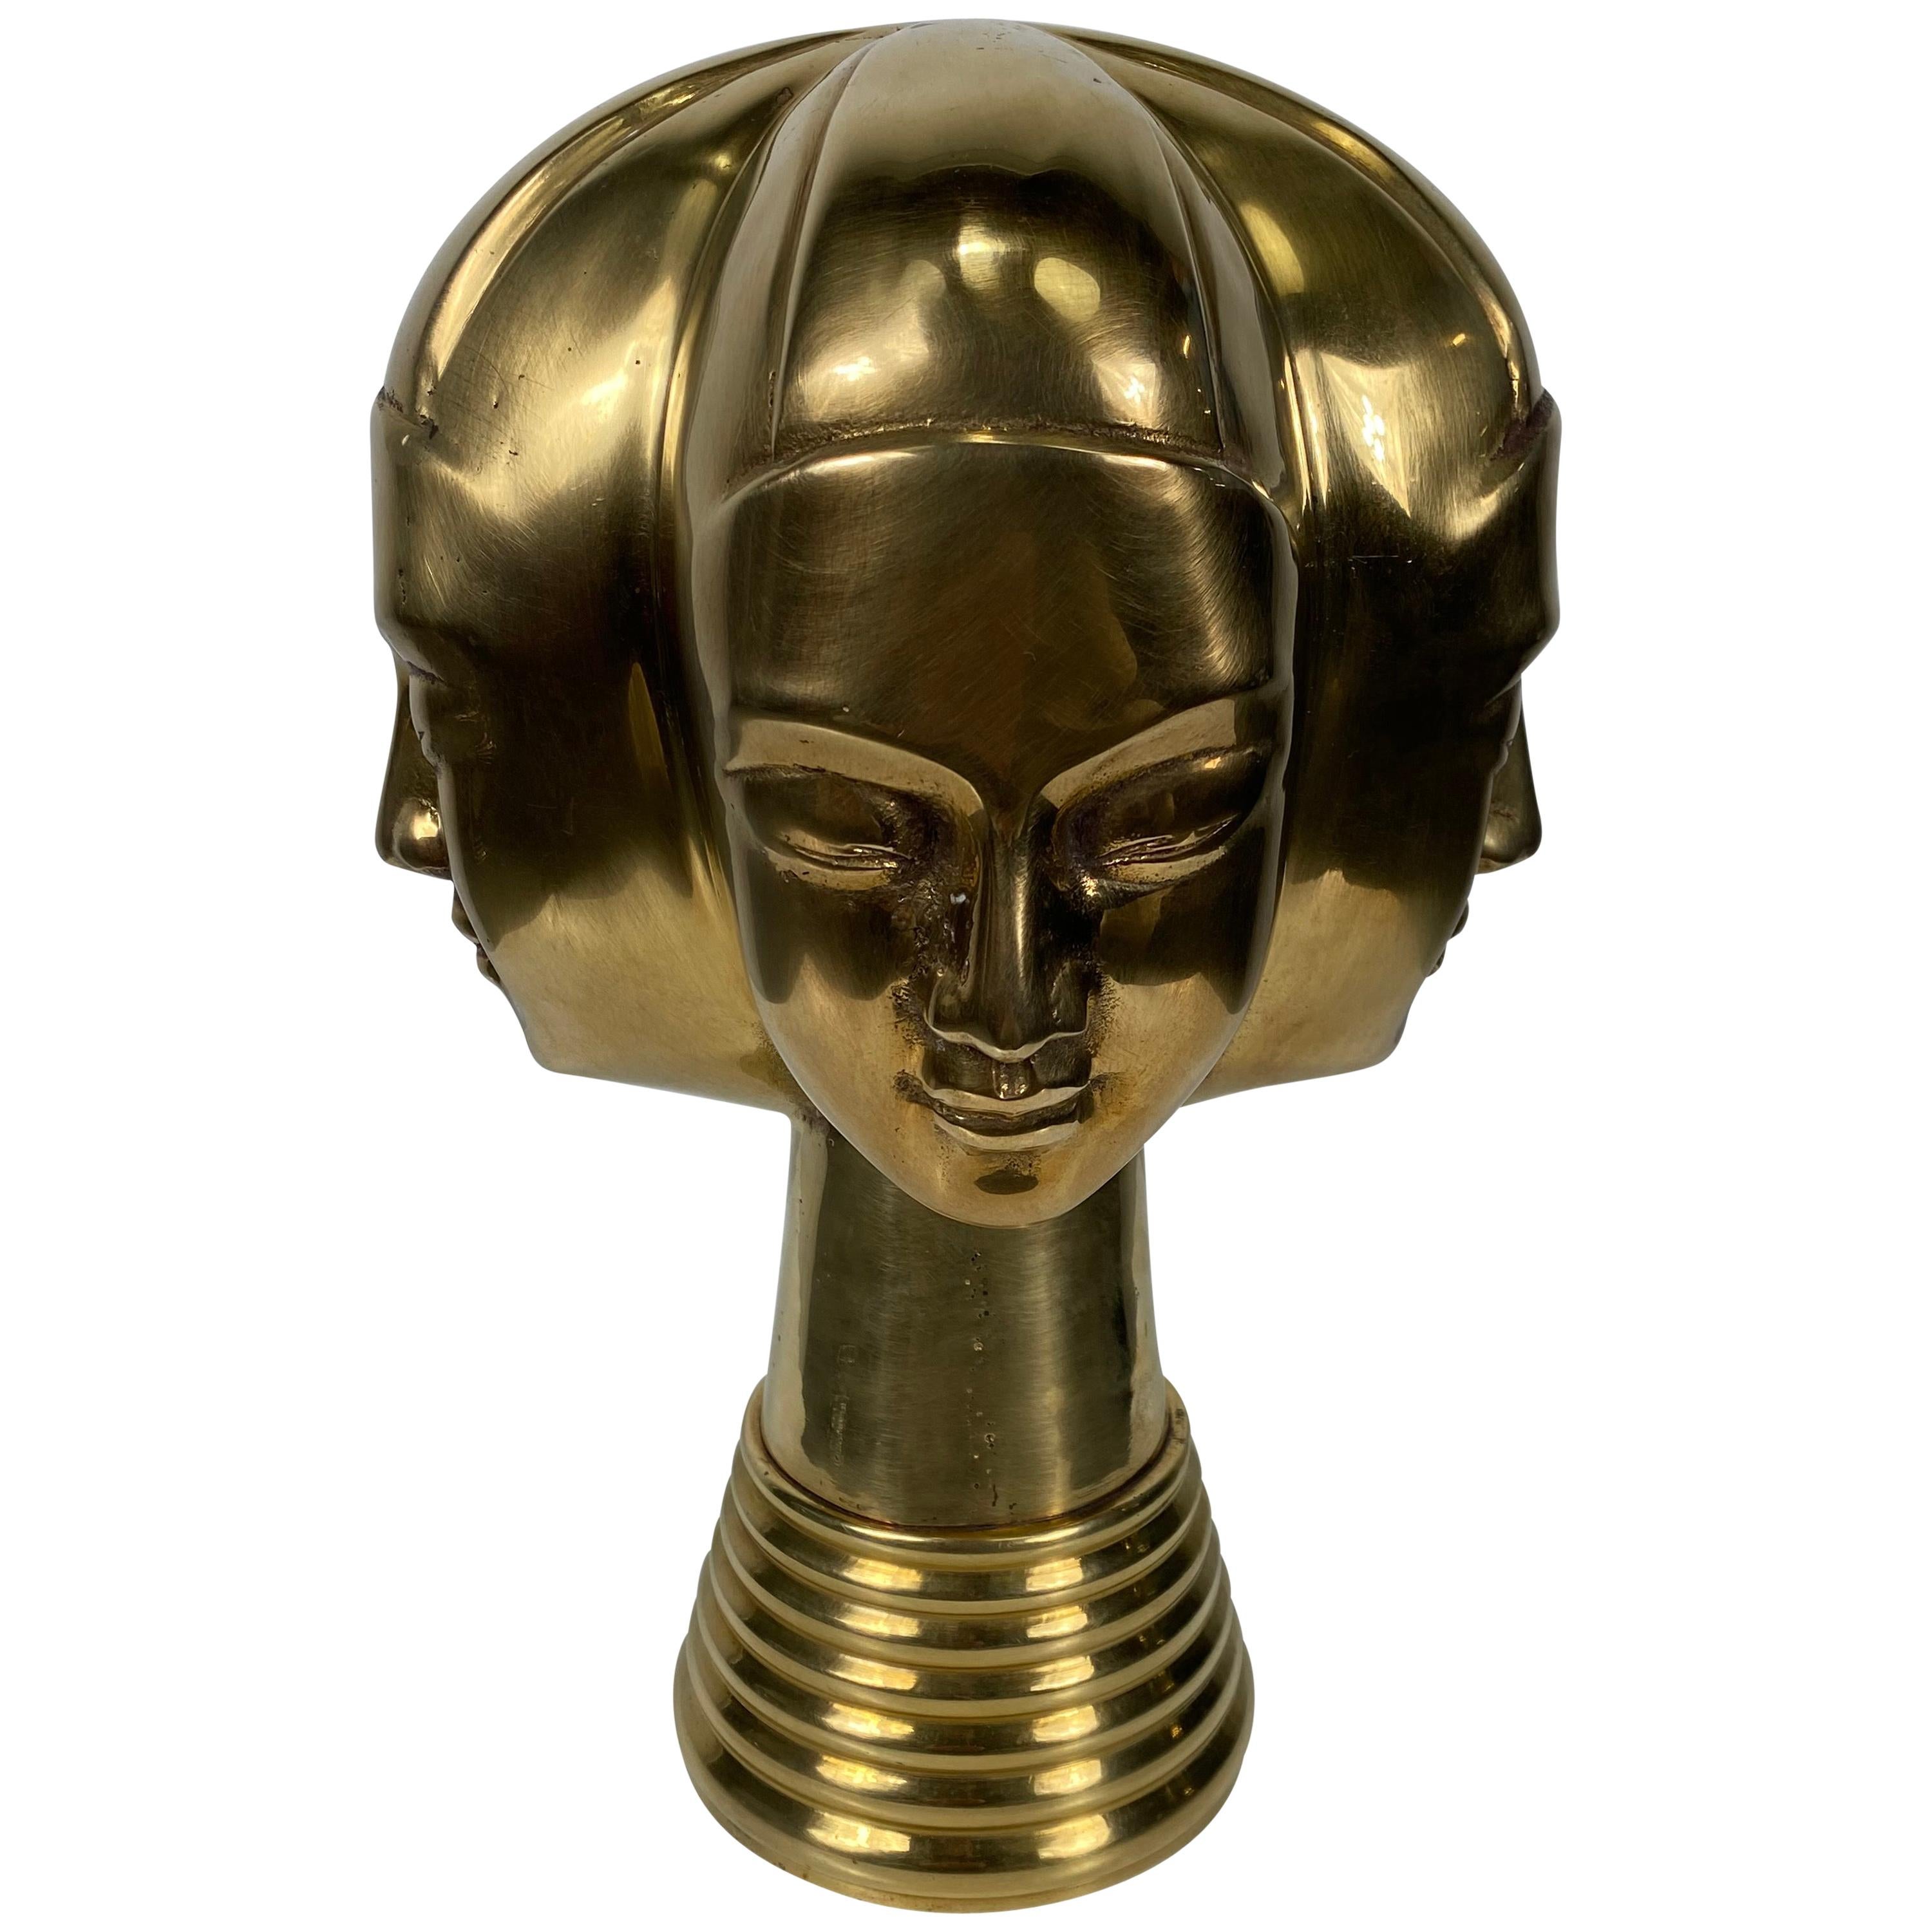 Unusual 4-Head Modernist Brass Sculpture by Dolbi Cashier